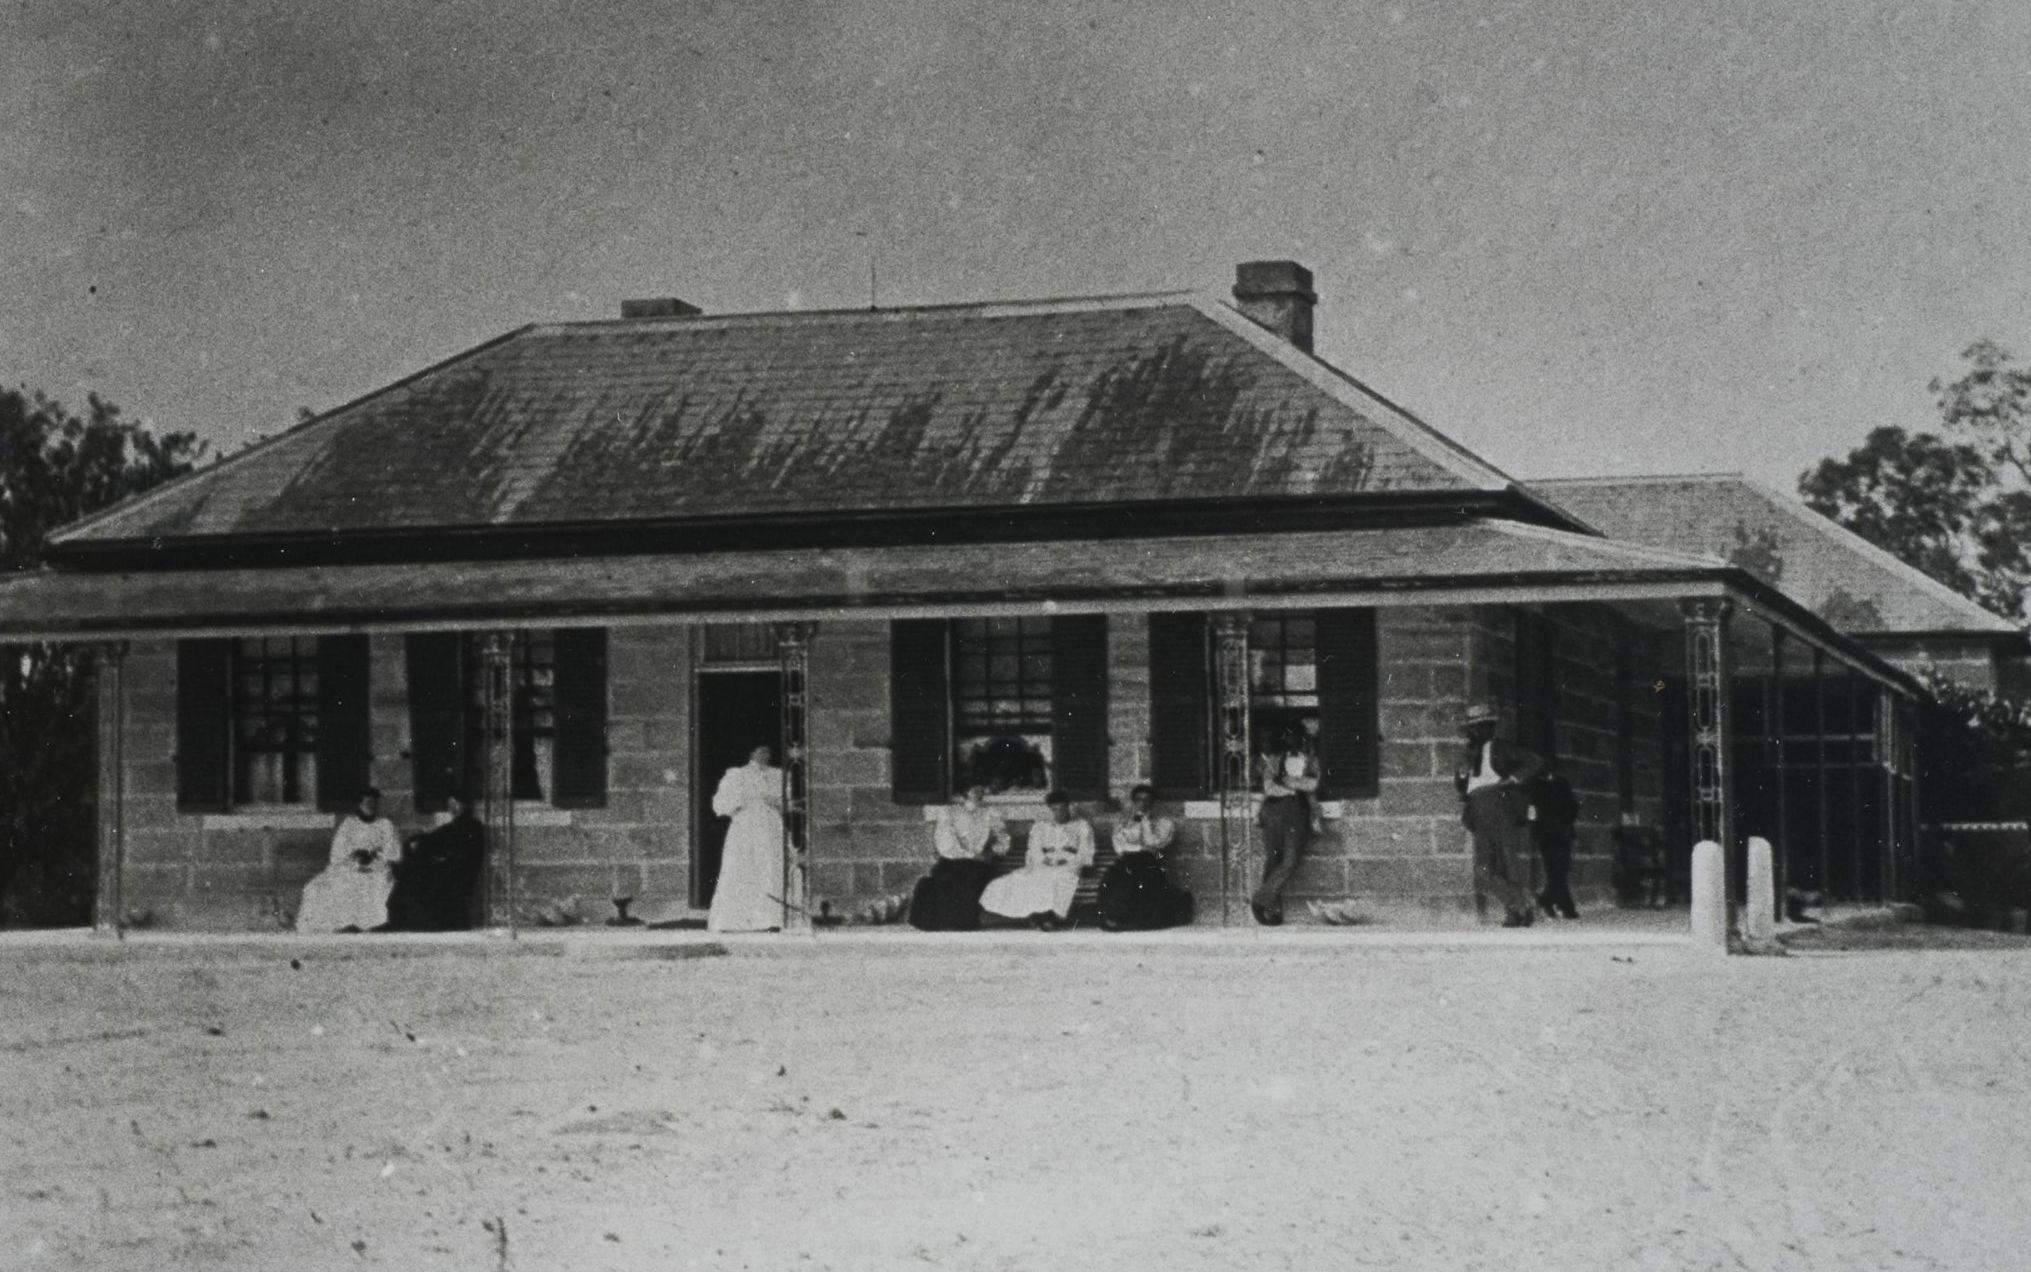 Rocklea Nursing Home, North Rocks, view of front exterior of building, circa 1880s.